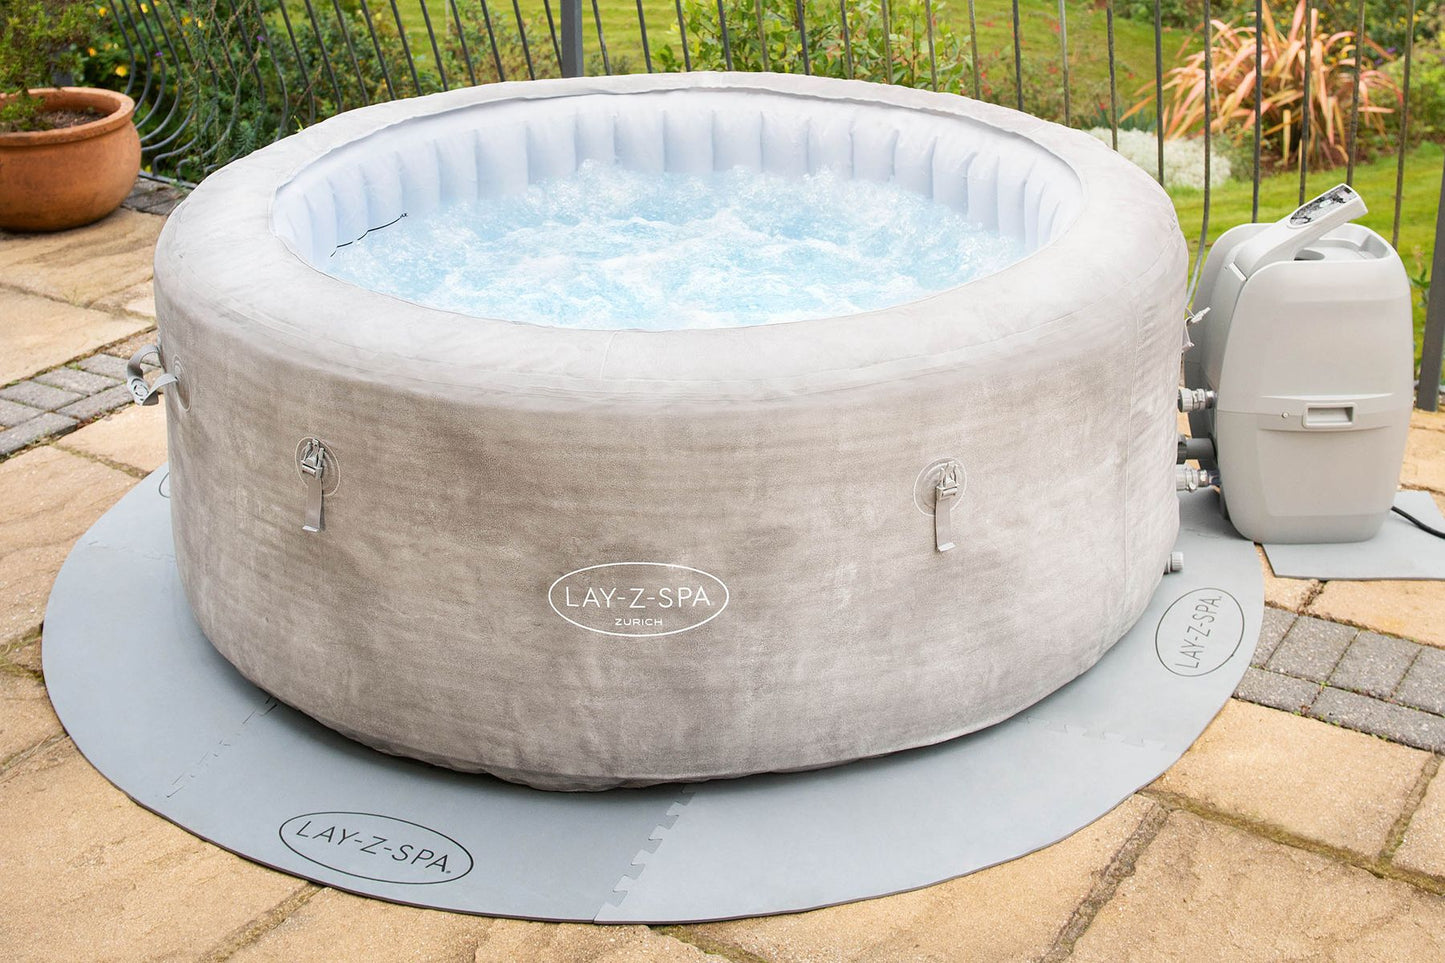 Lay-Z-Spa Hot Tub Floor Protector Round